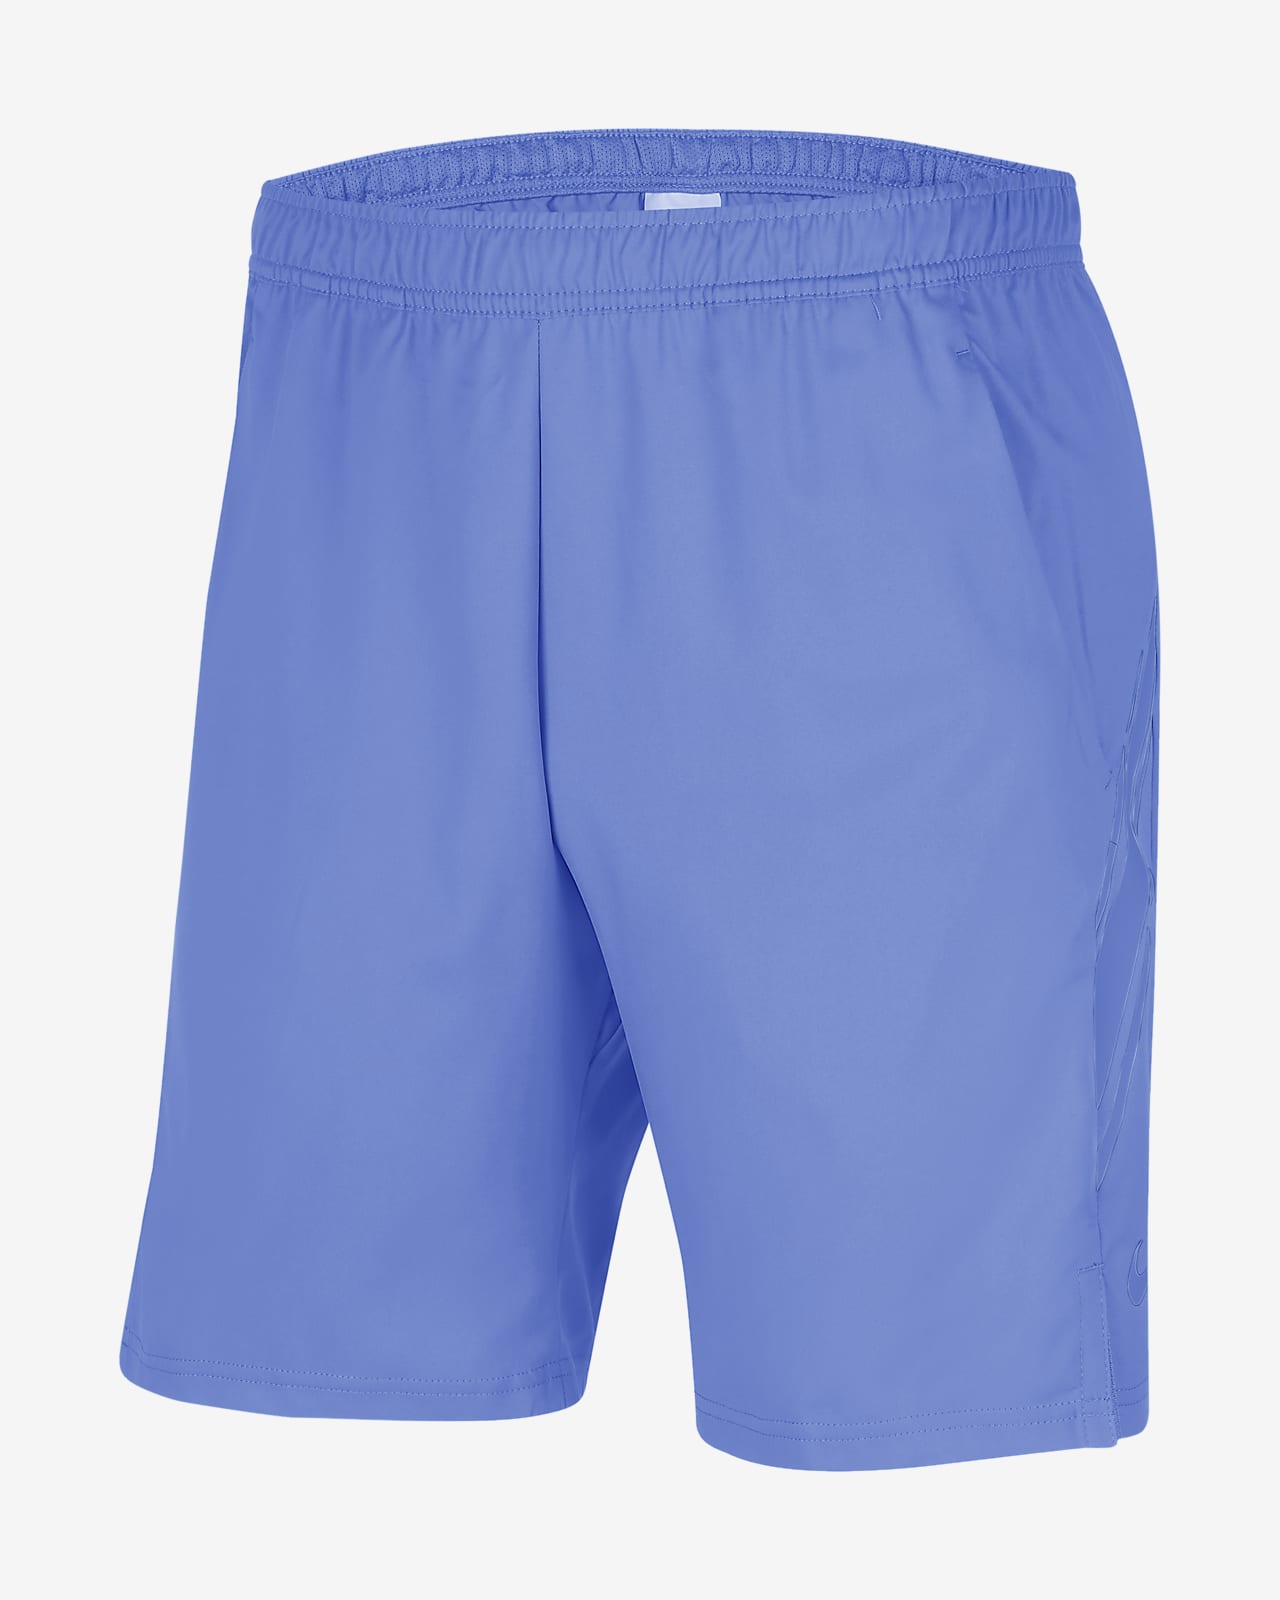 NikeCourt Dri-FIT Men's 9" (23cm approx.) Tennis Shorts